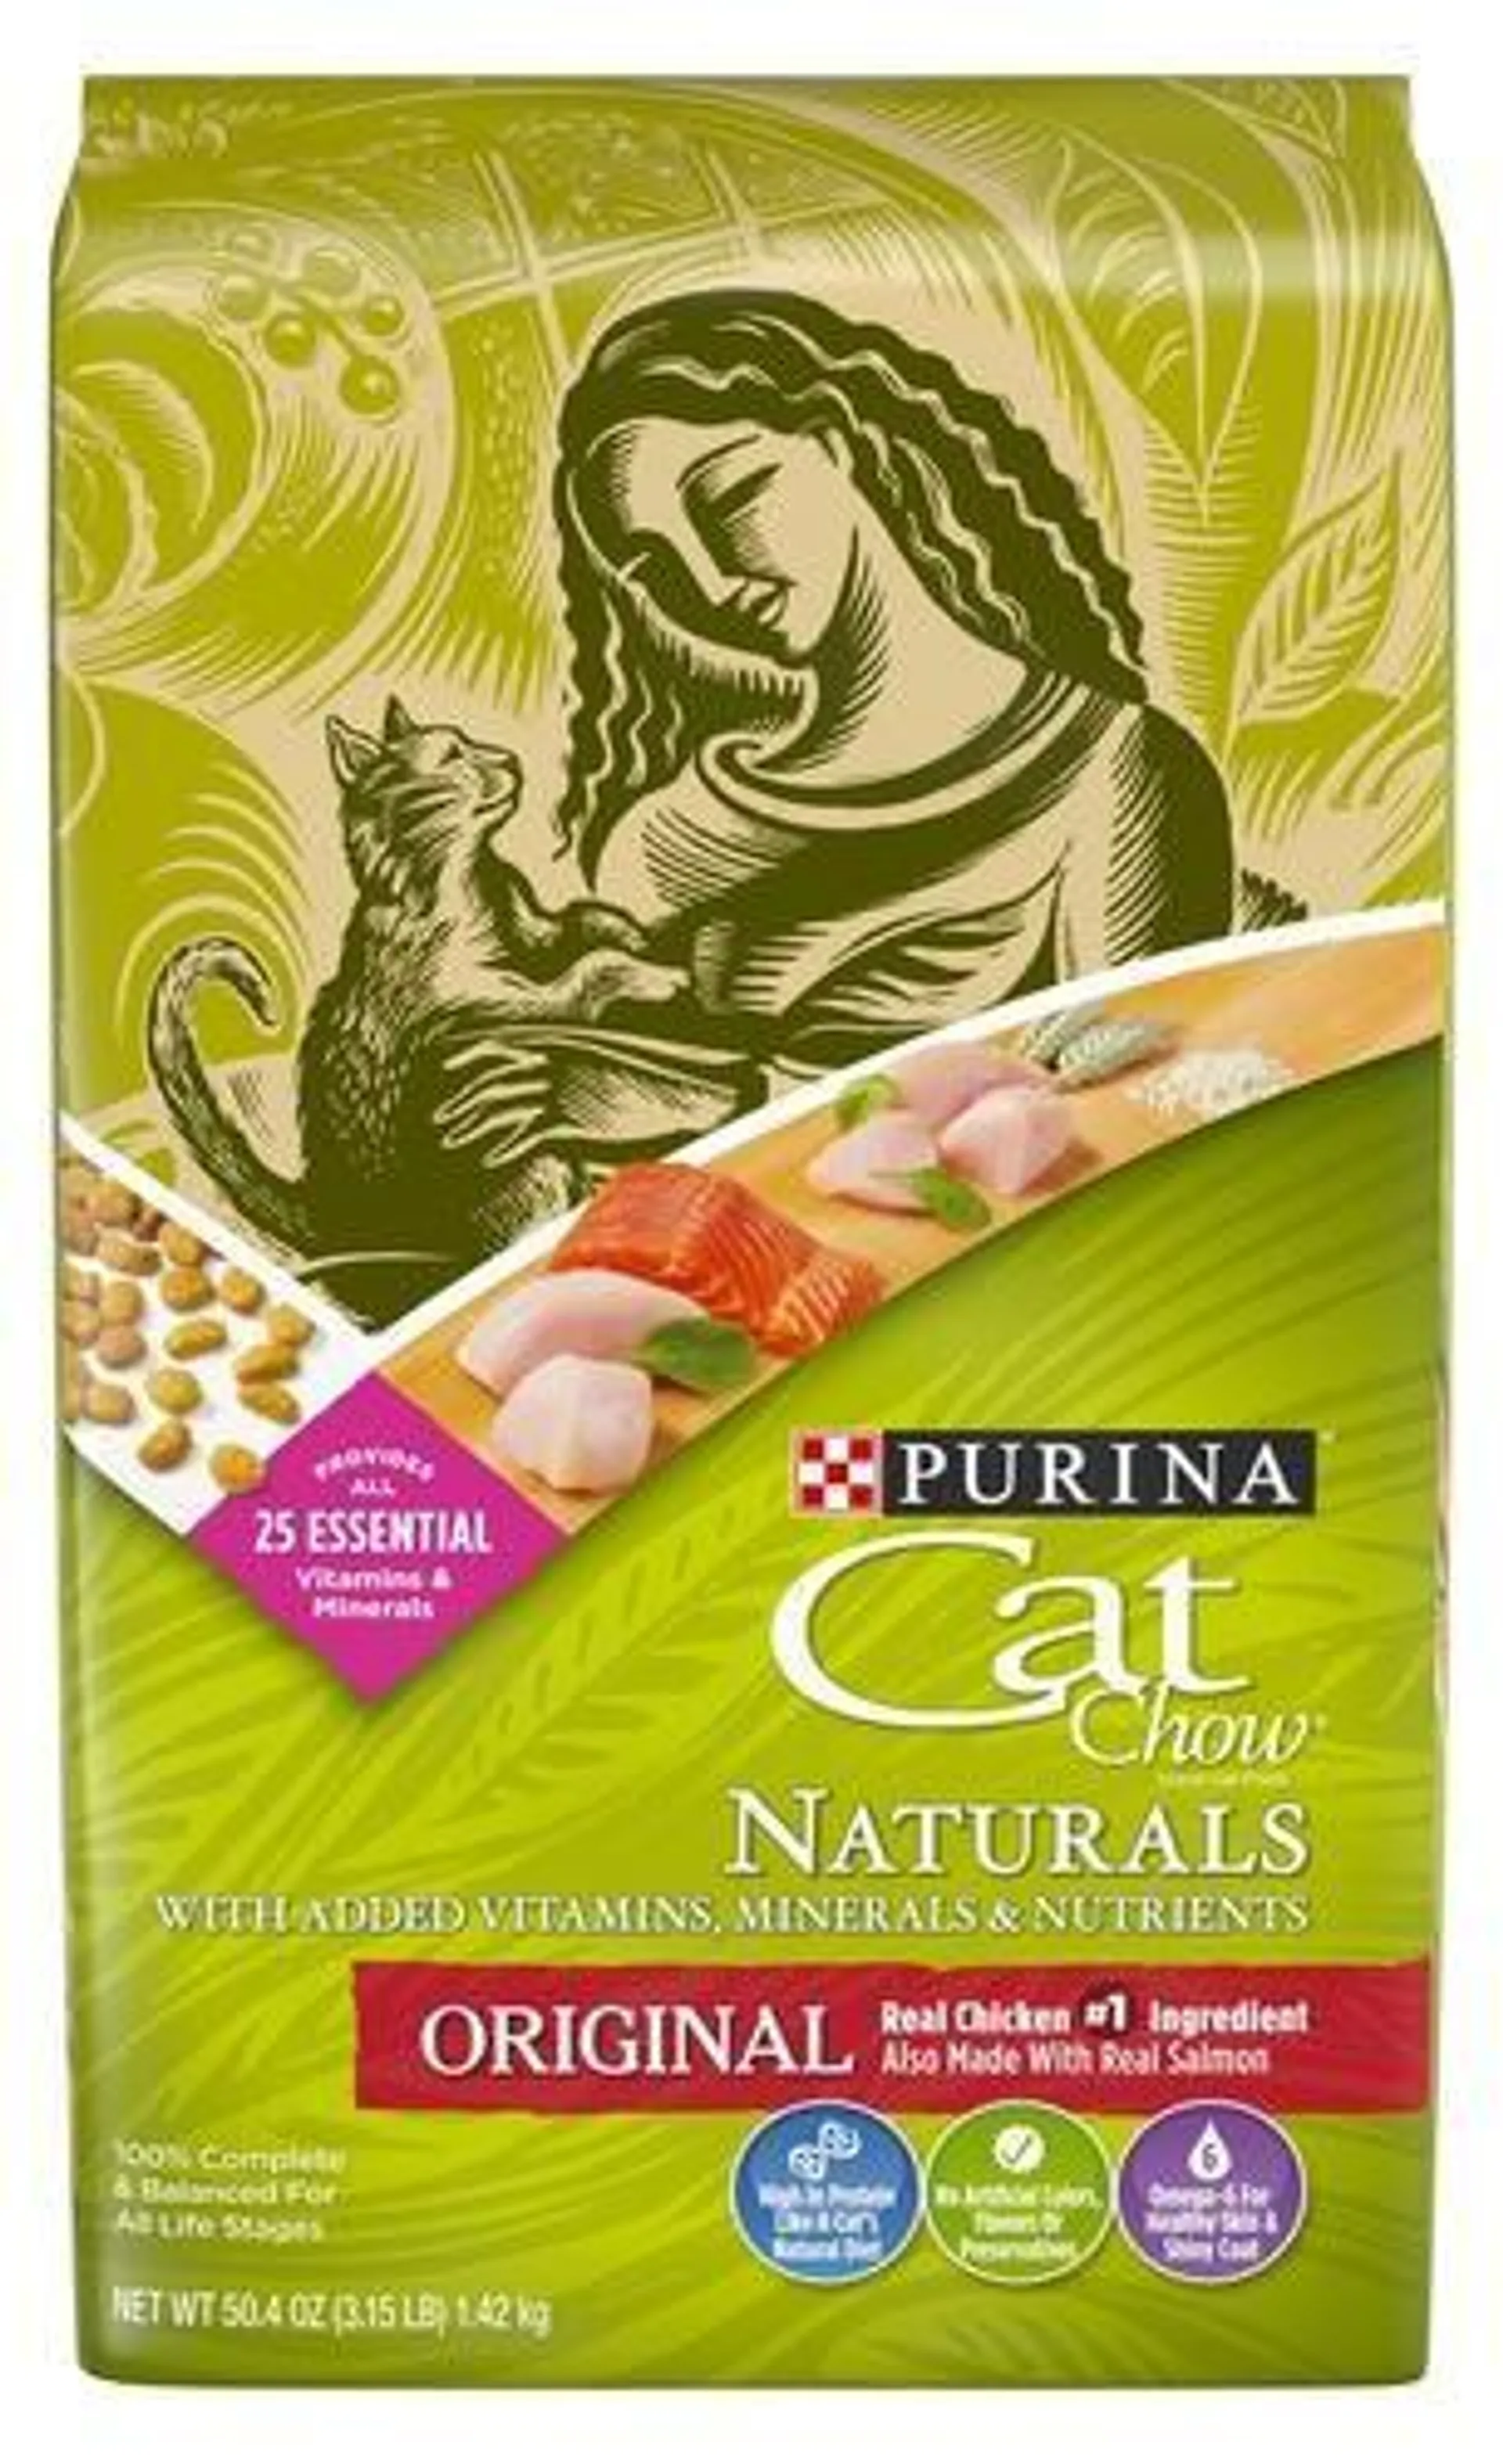 PURINA CAT CHOW NATURALS